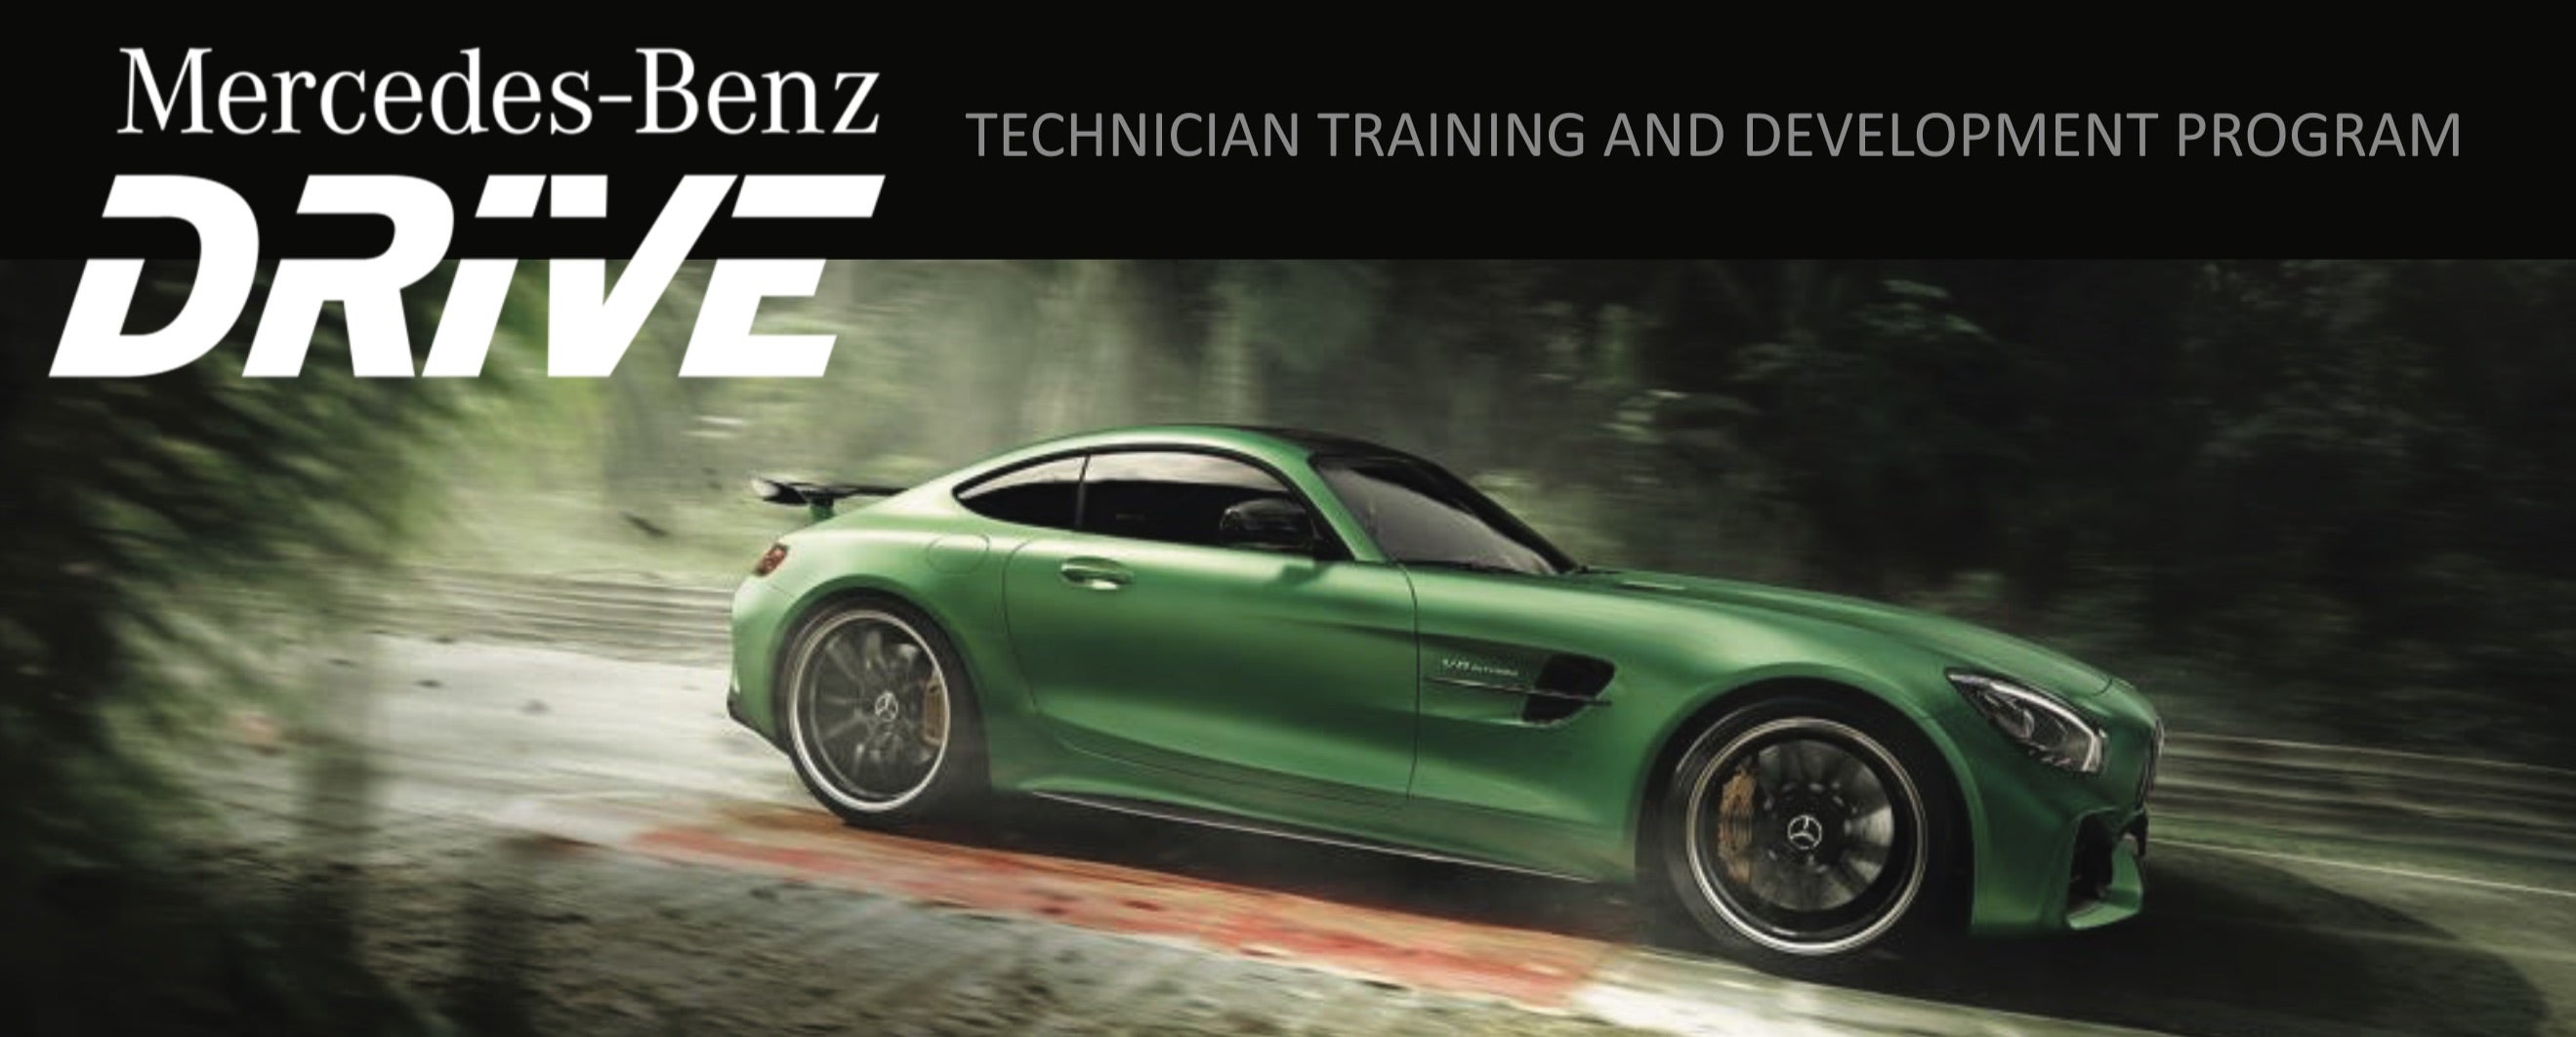 Mercedes Benz Drive Technician Training Program Sponsorship